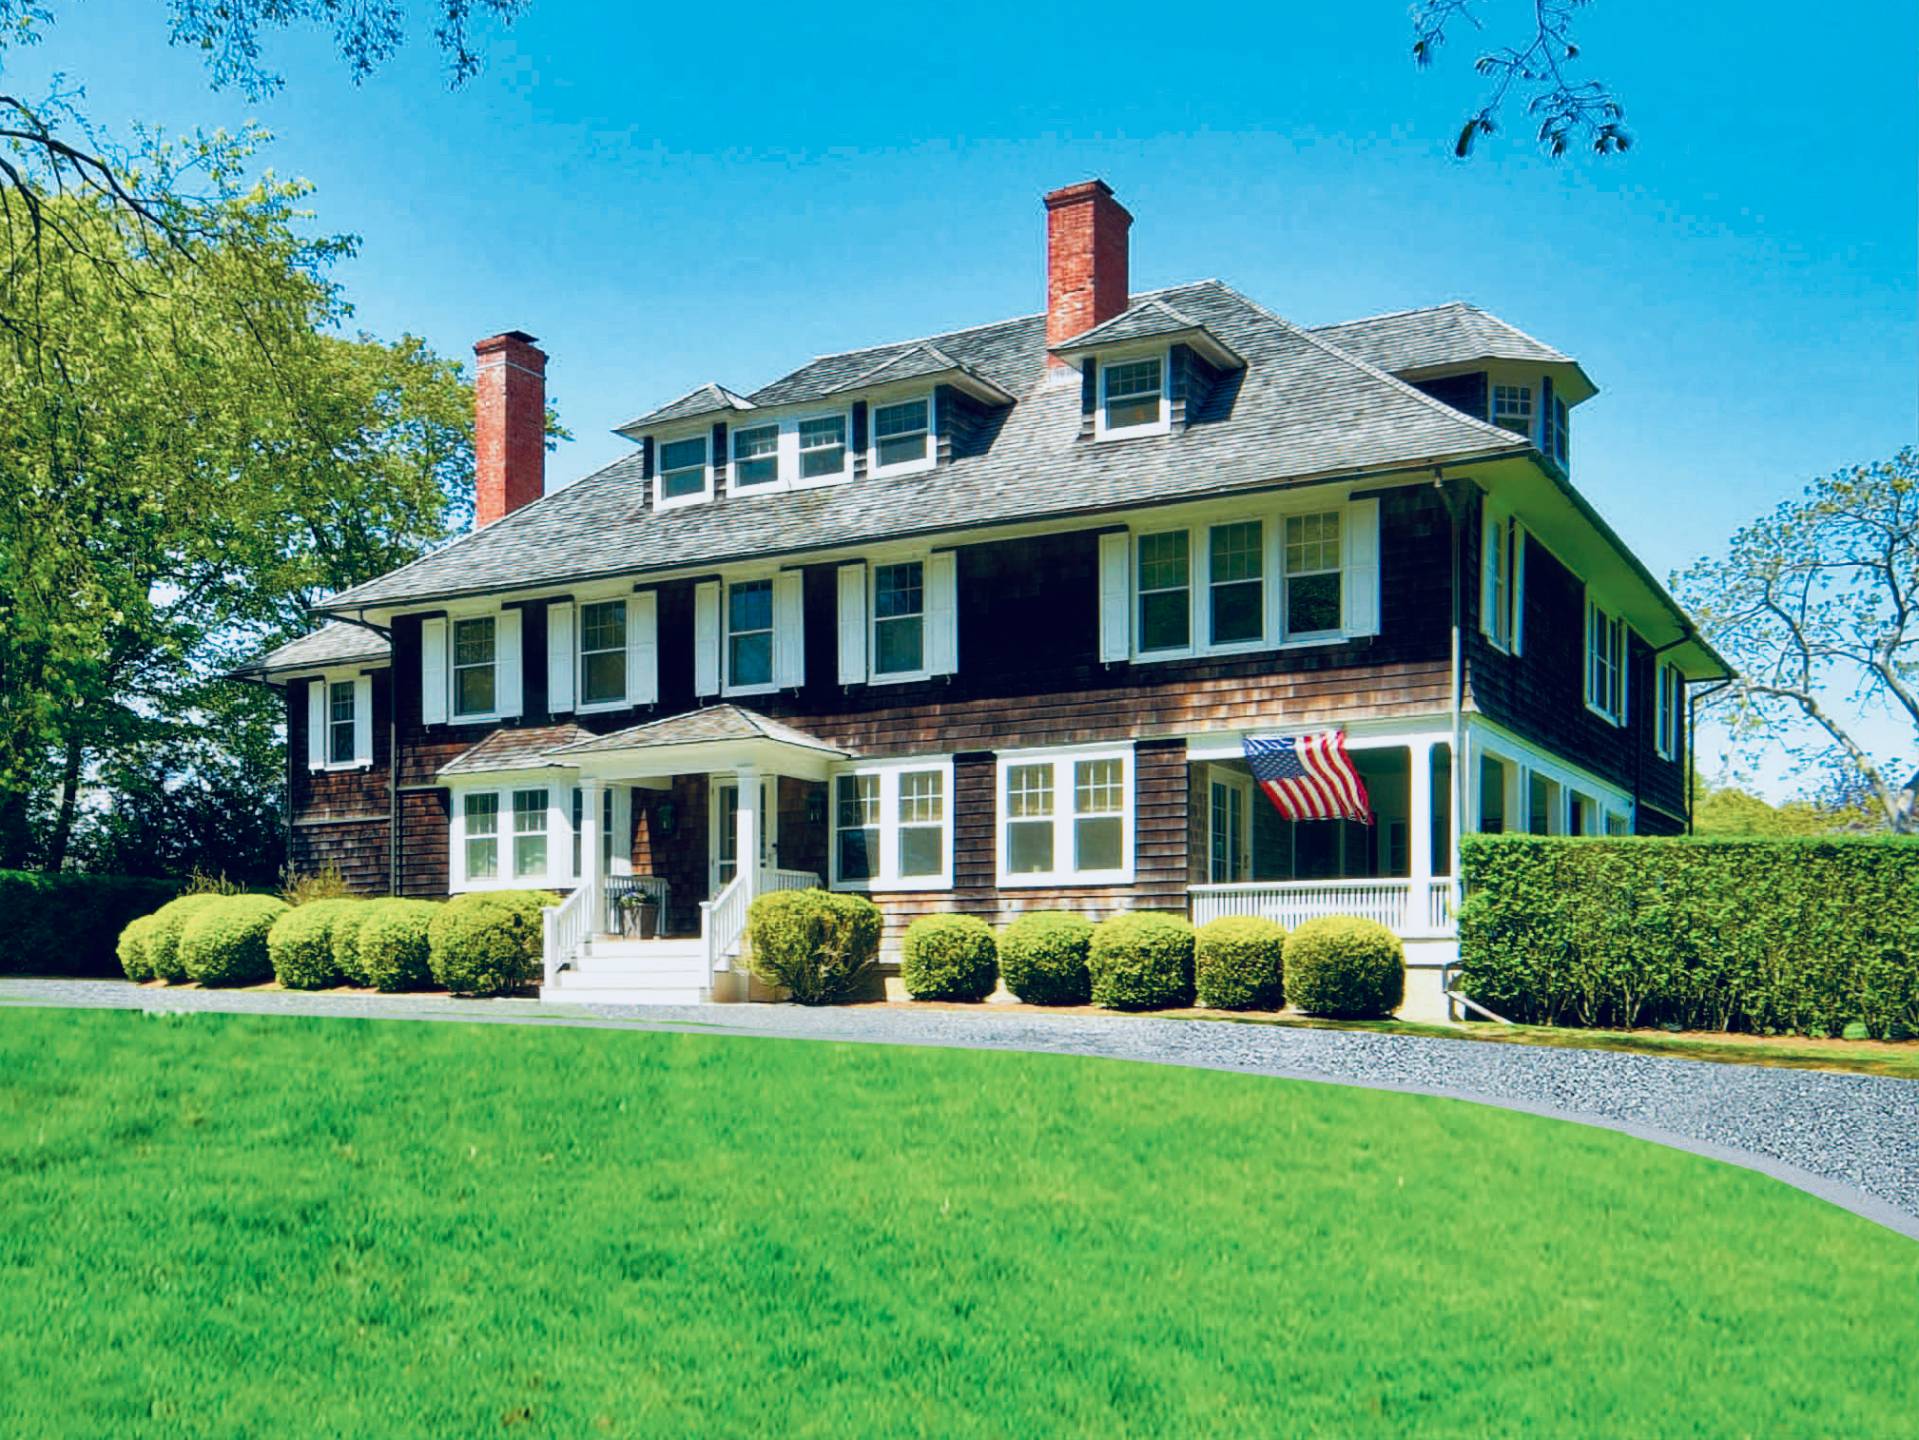 Rental Property at Village Of East Hampton, Village Of East Hampton, Hamptons, NY - Bedrooms: 11 
Bathrooms: 8.5  - $125,000 MO.